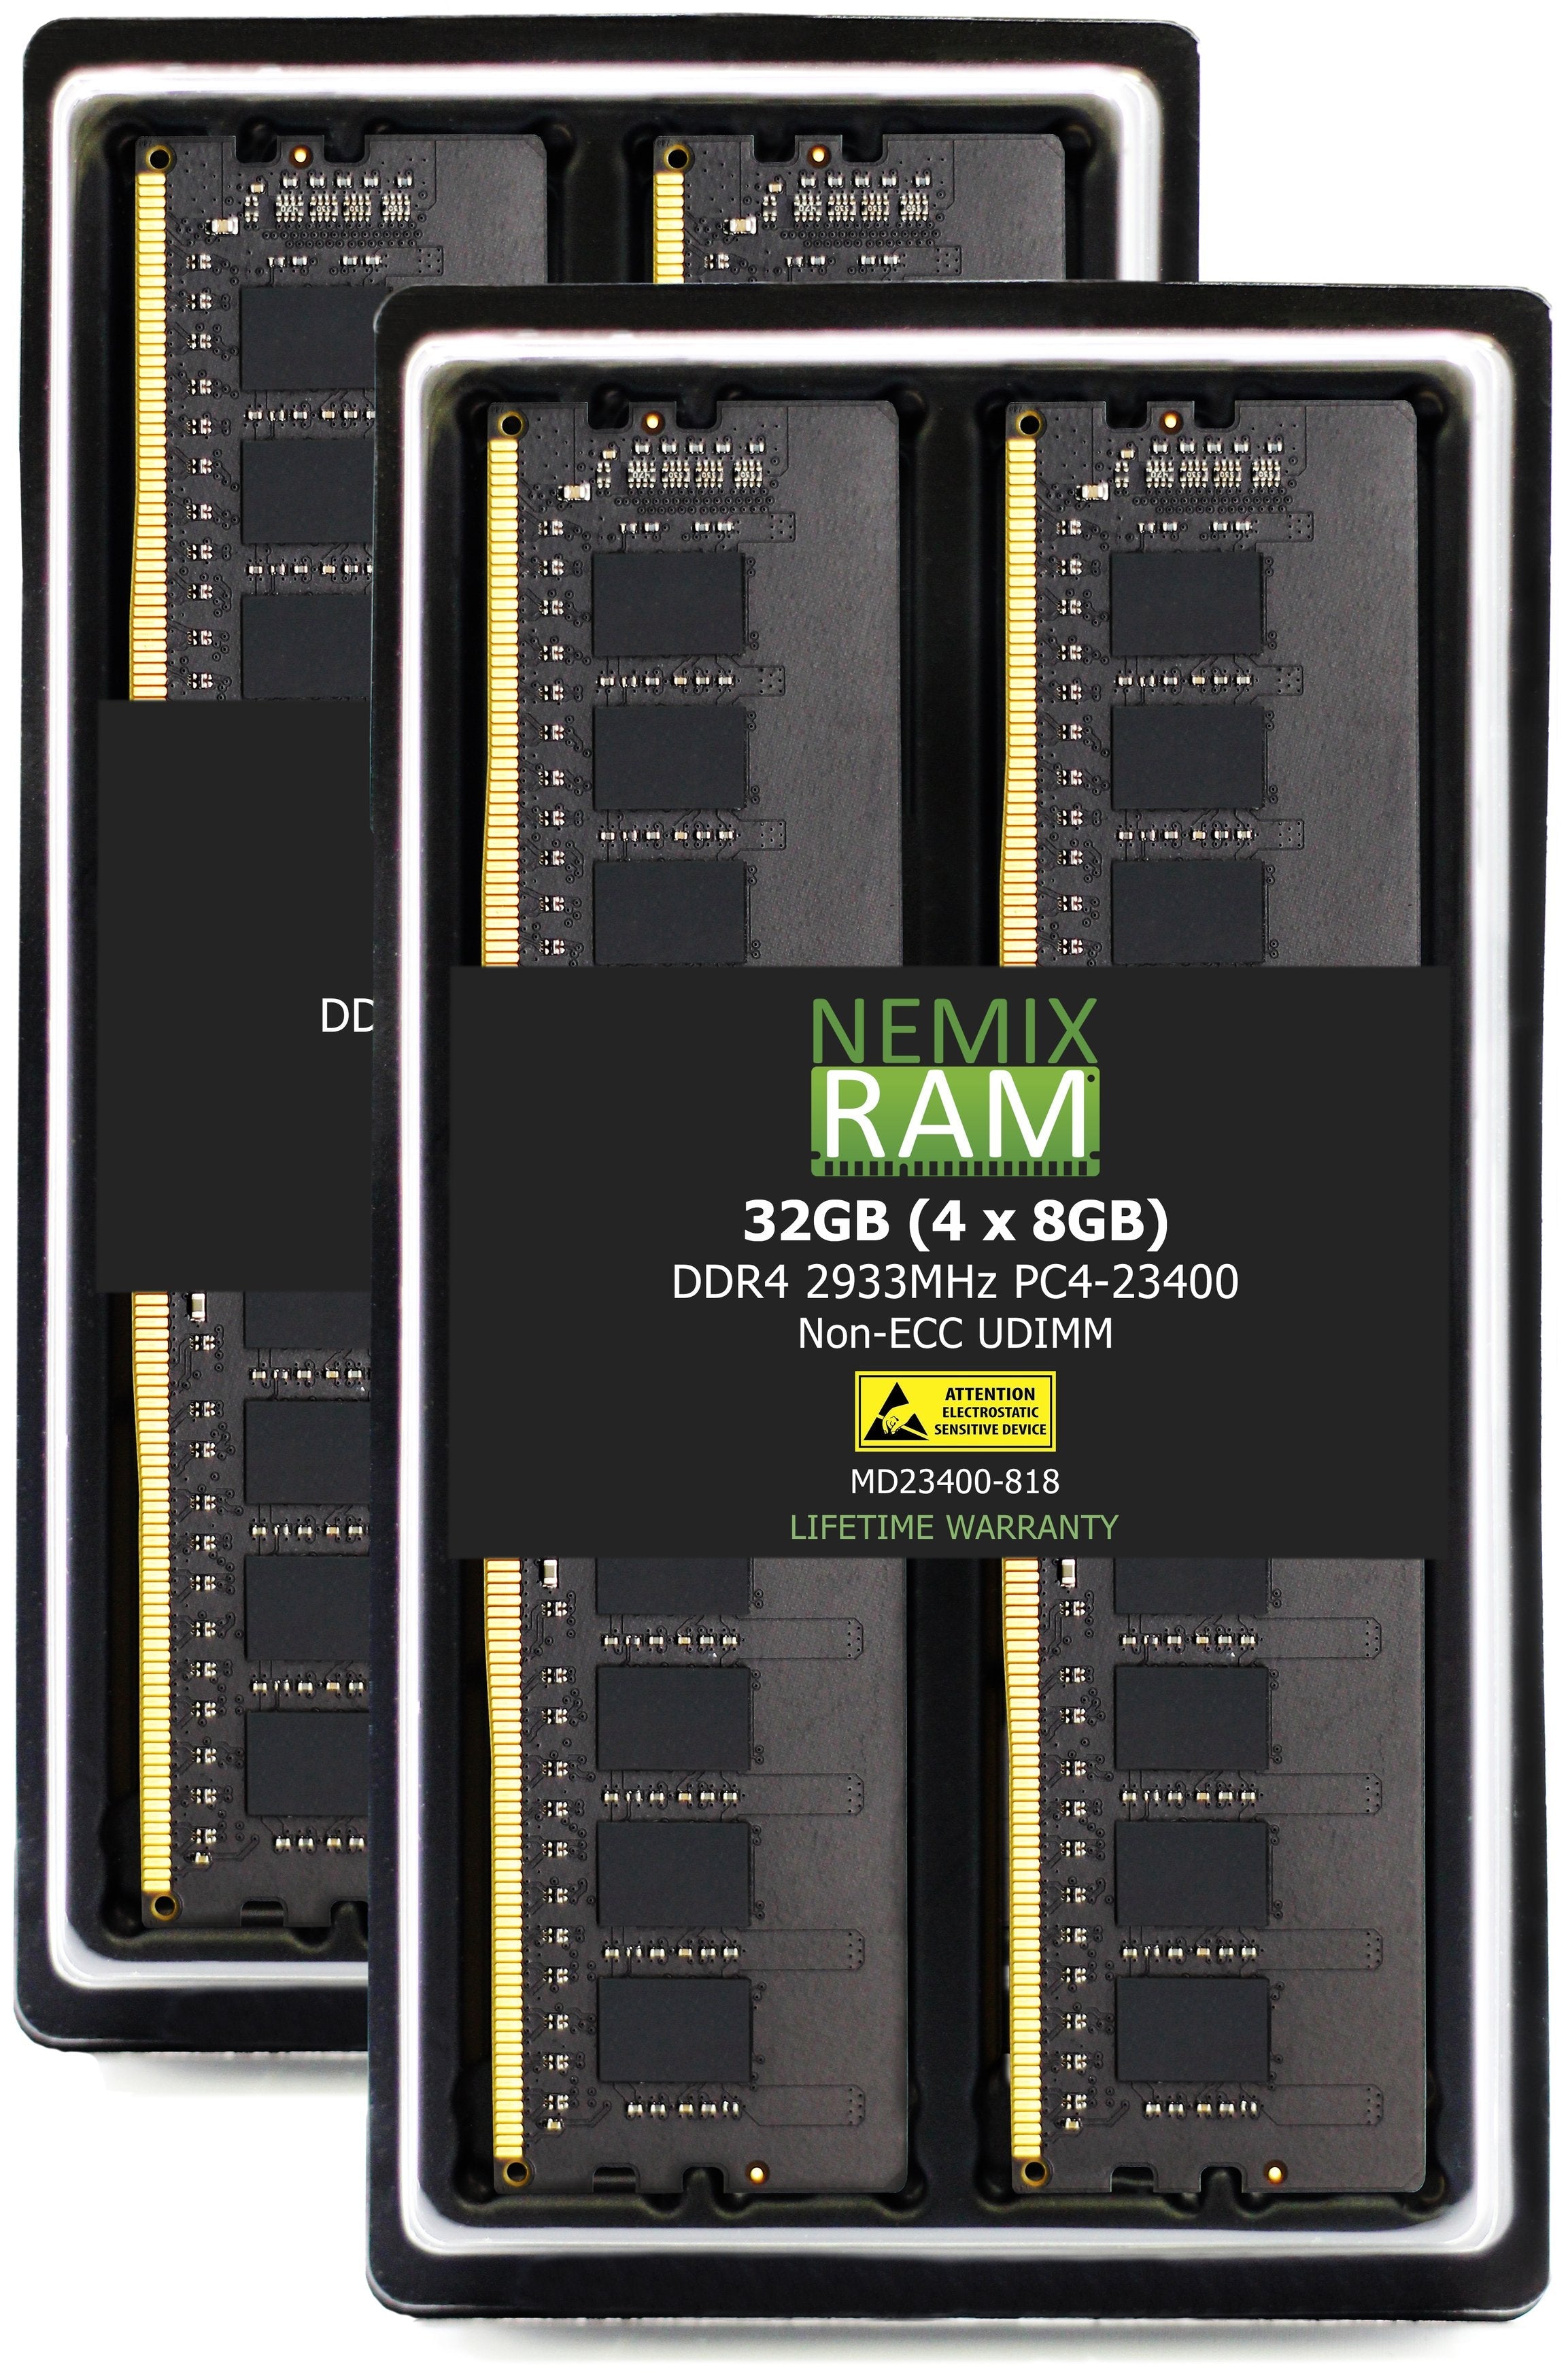 DDR4 2933MHZ PC4-23400 UDIMM 1RX8